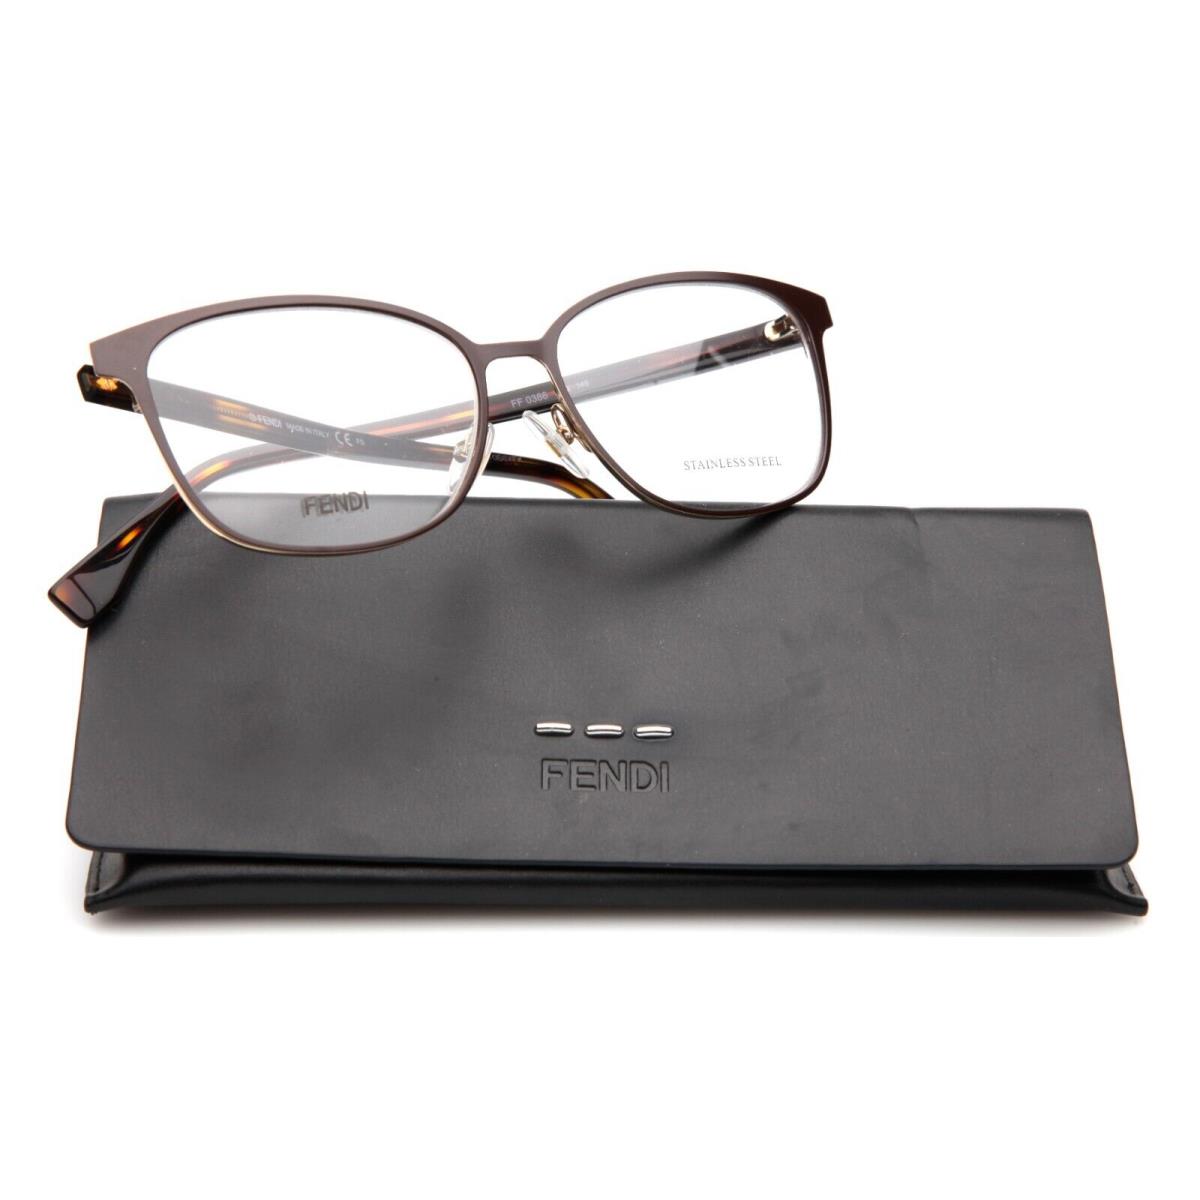 Fendi FF 0386 09Q Brown Eyeglasses Glasses Frame 55-15-135 B40mm Italy